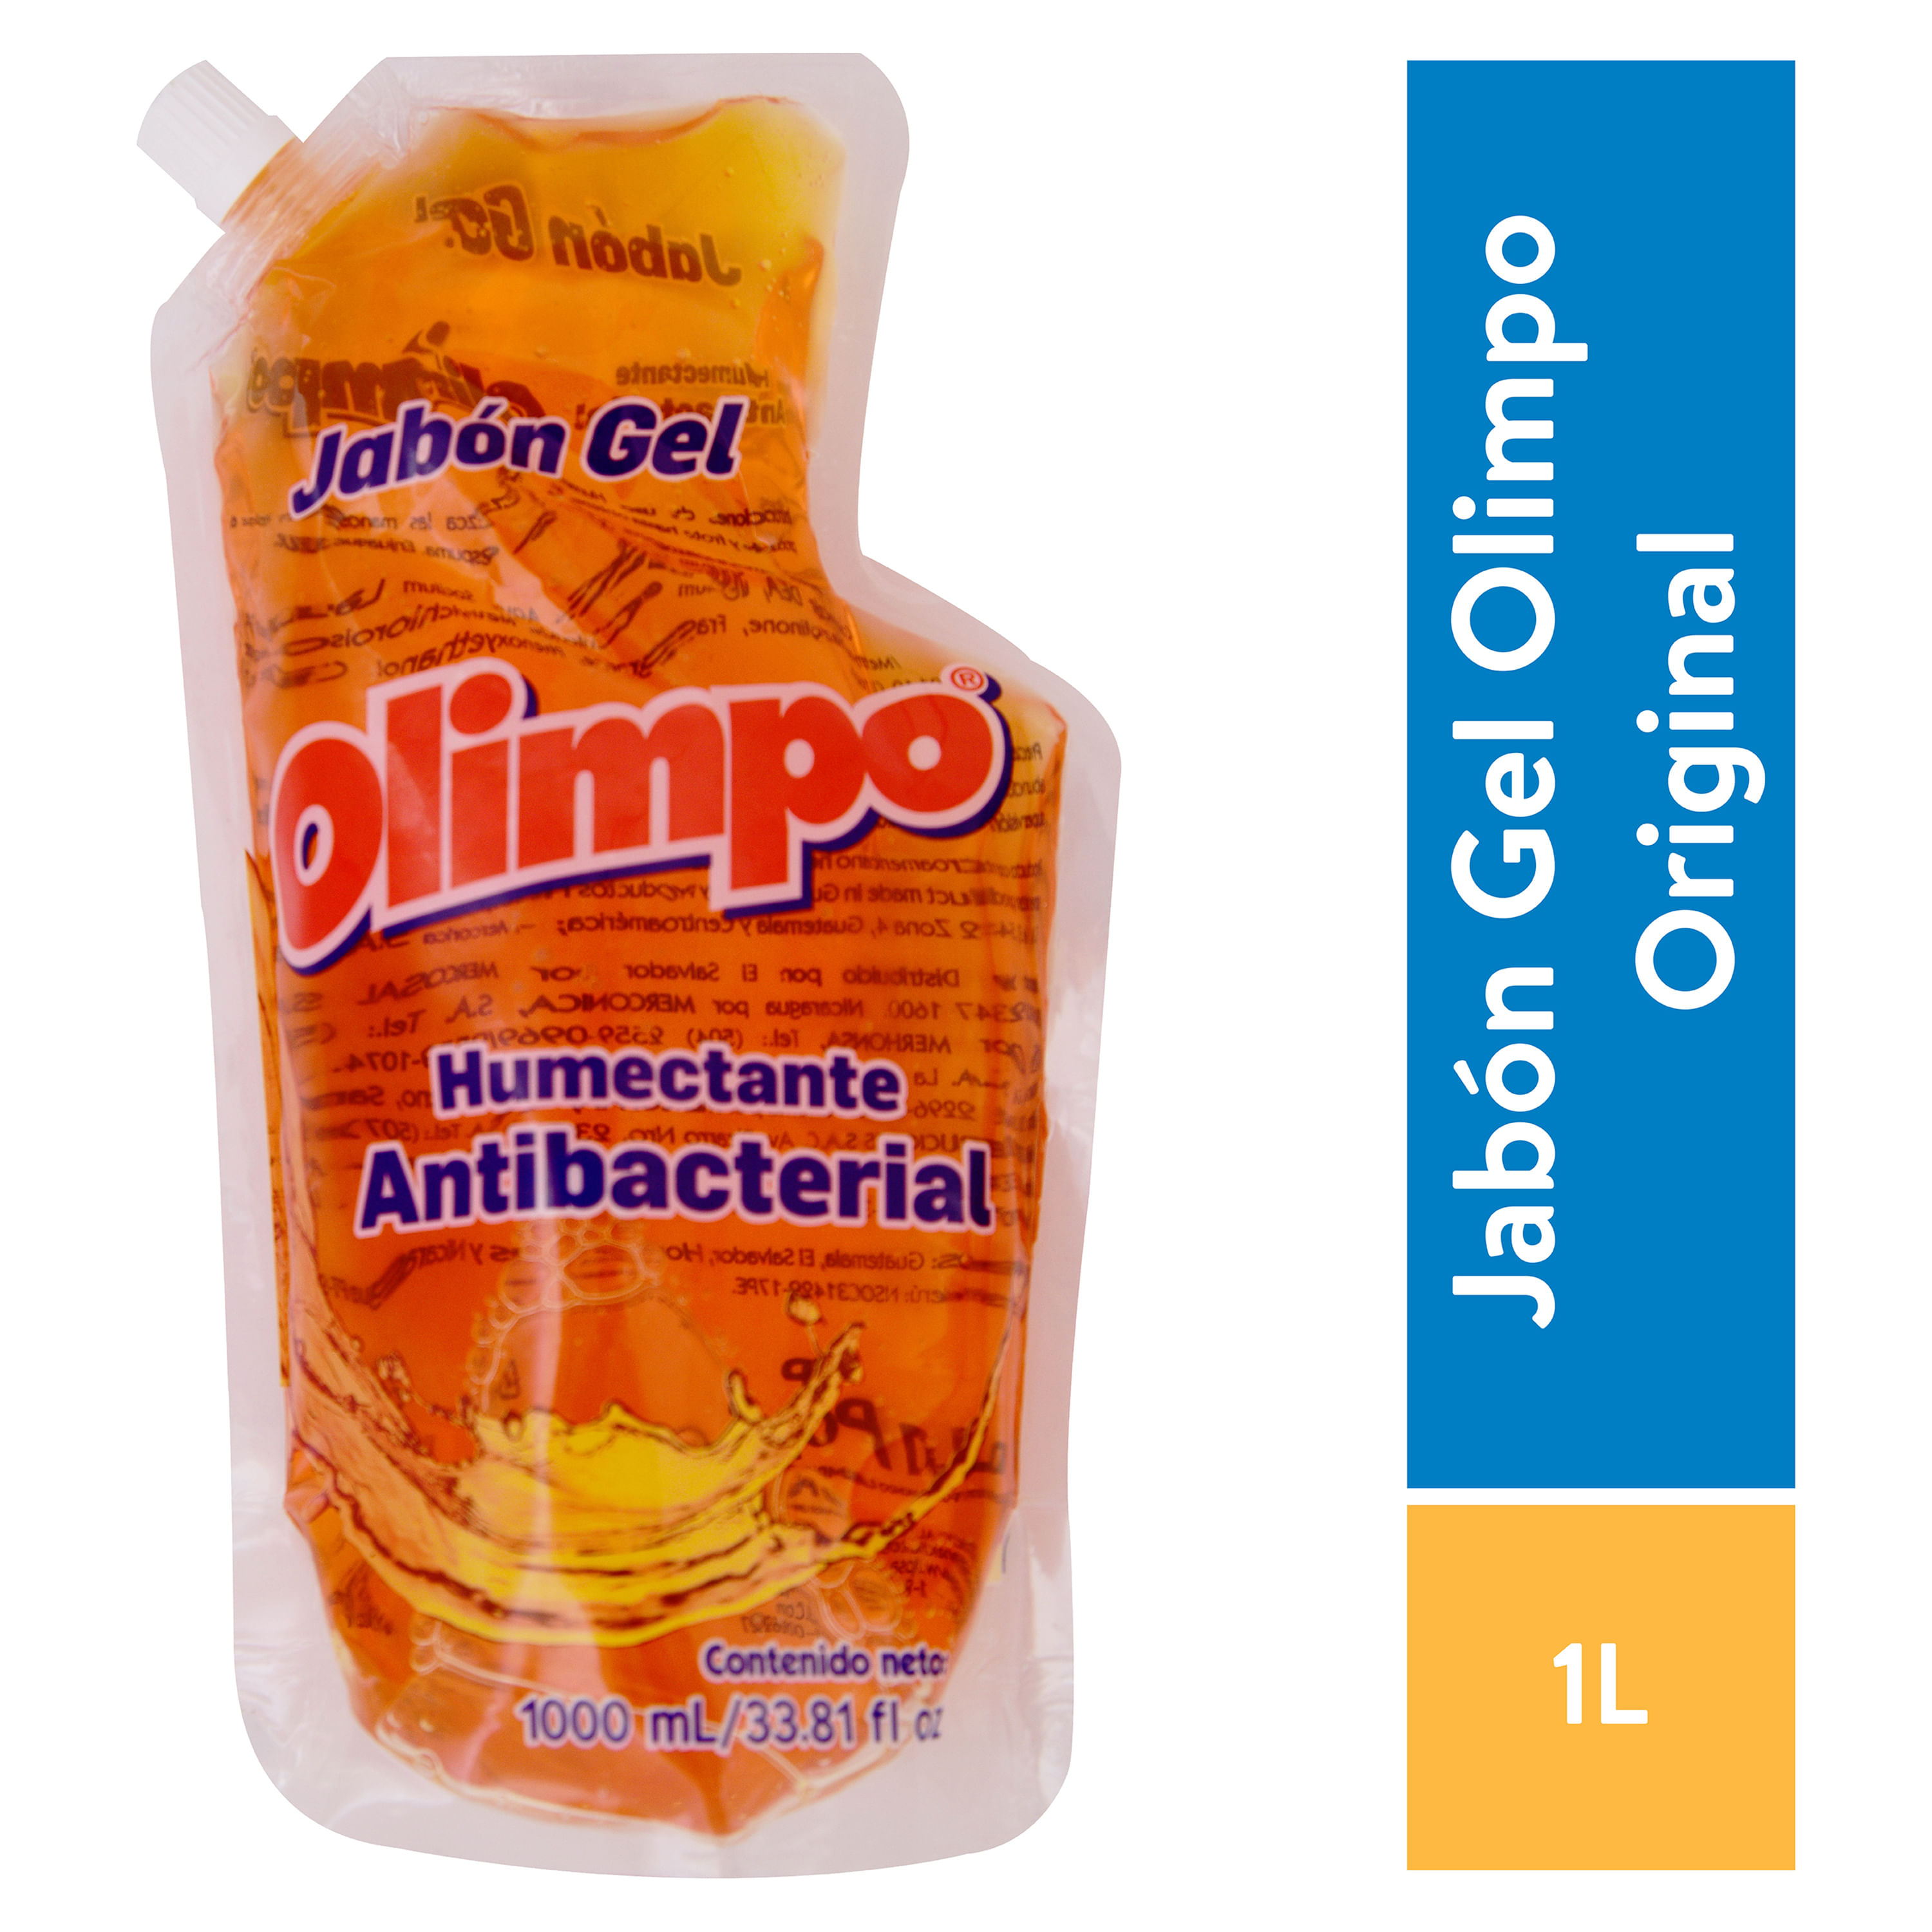 Jabon-Liq-Olimpo-Antibacterial-1000ml-1-32305